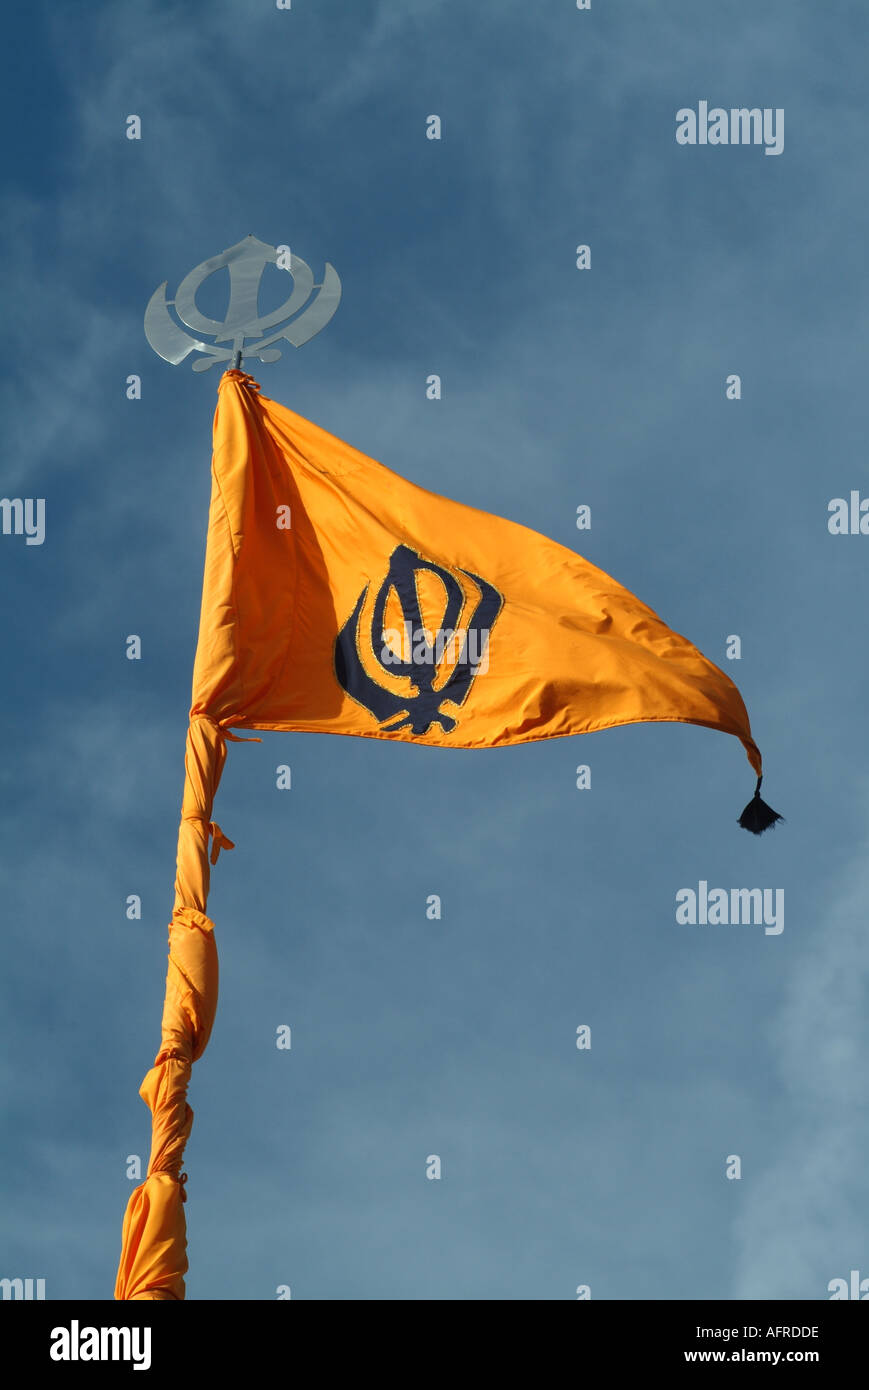 Bandera Sikh o Nishan Sahib vuela fuera de un templo sij o Gurdwara, Hounslow, Middlesex, Reino Unido. Foto de stock